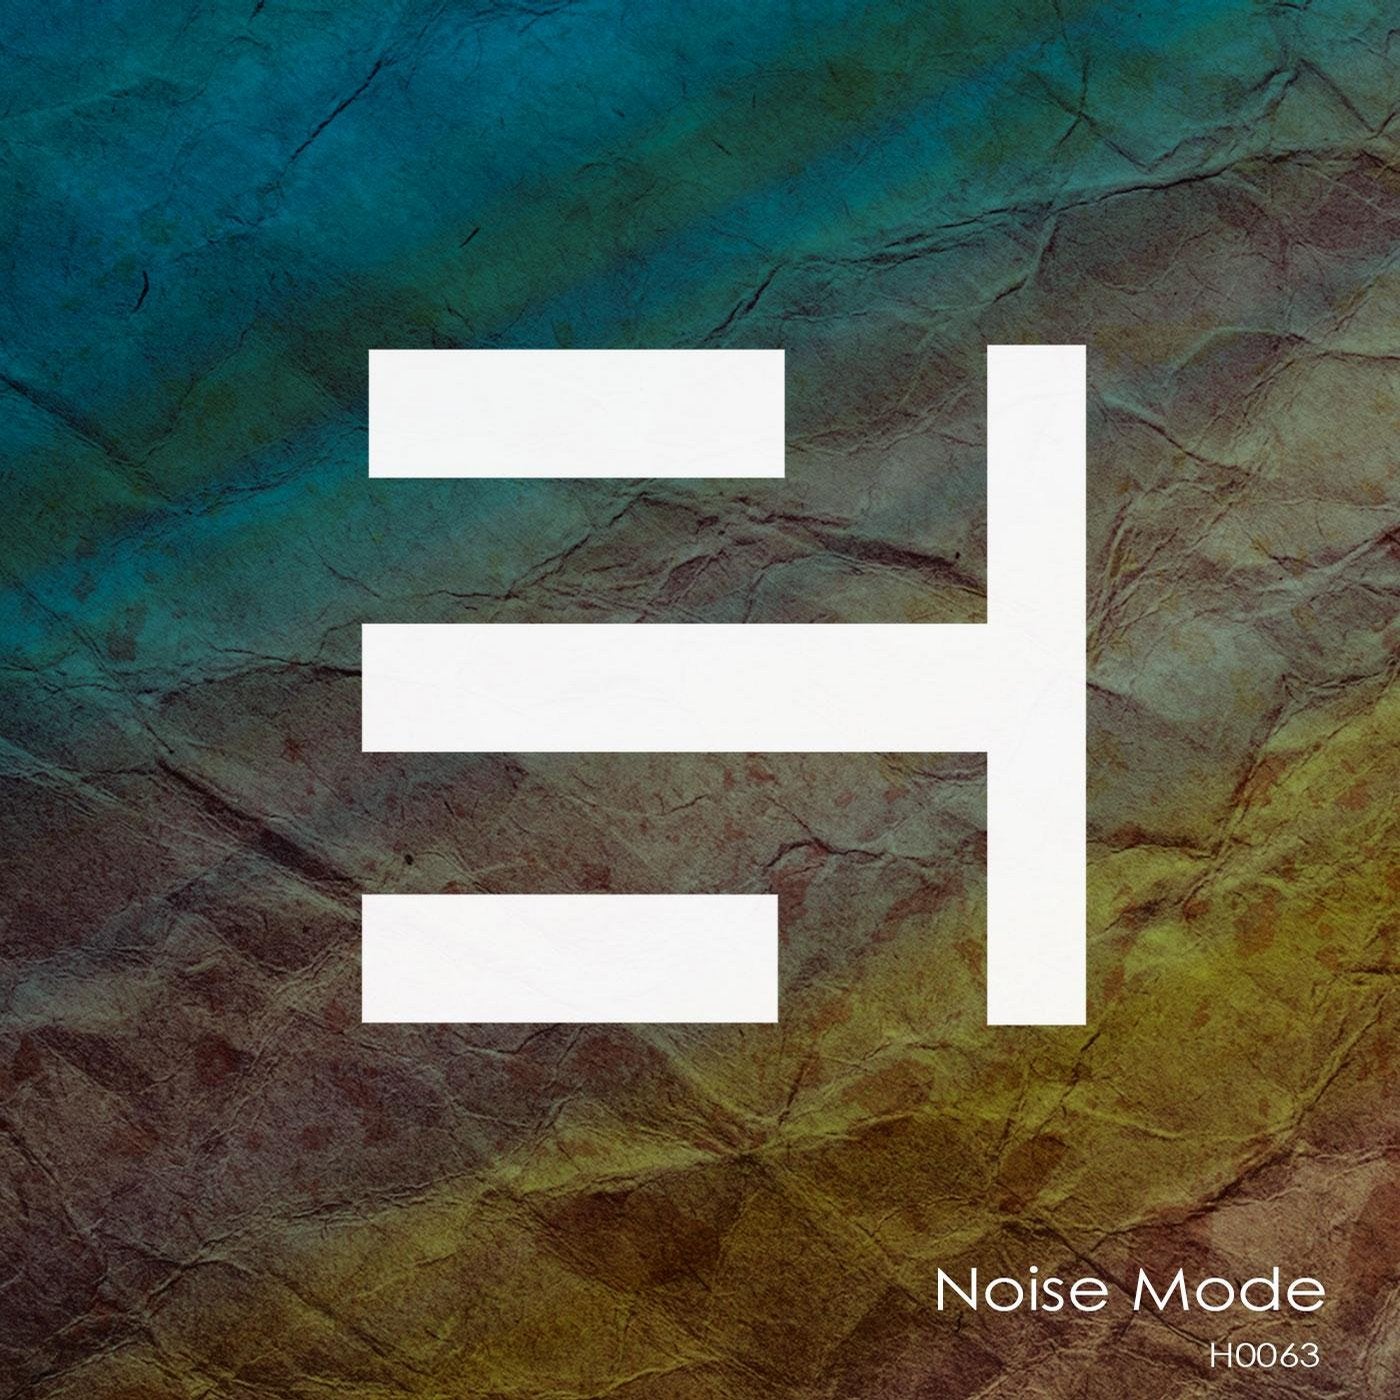 Noise Mode